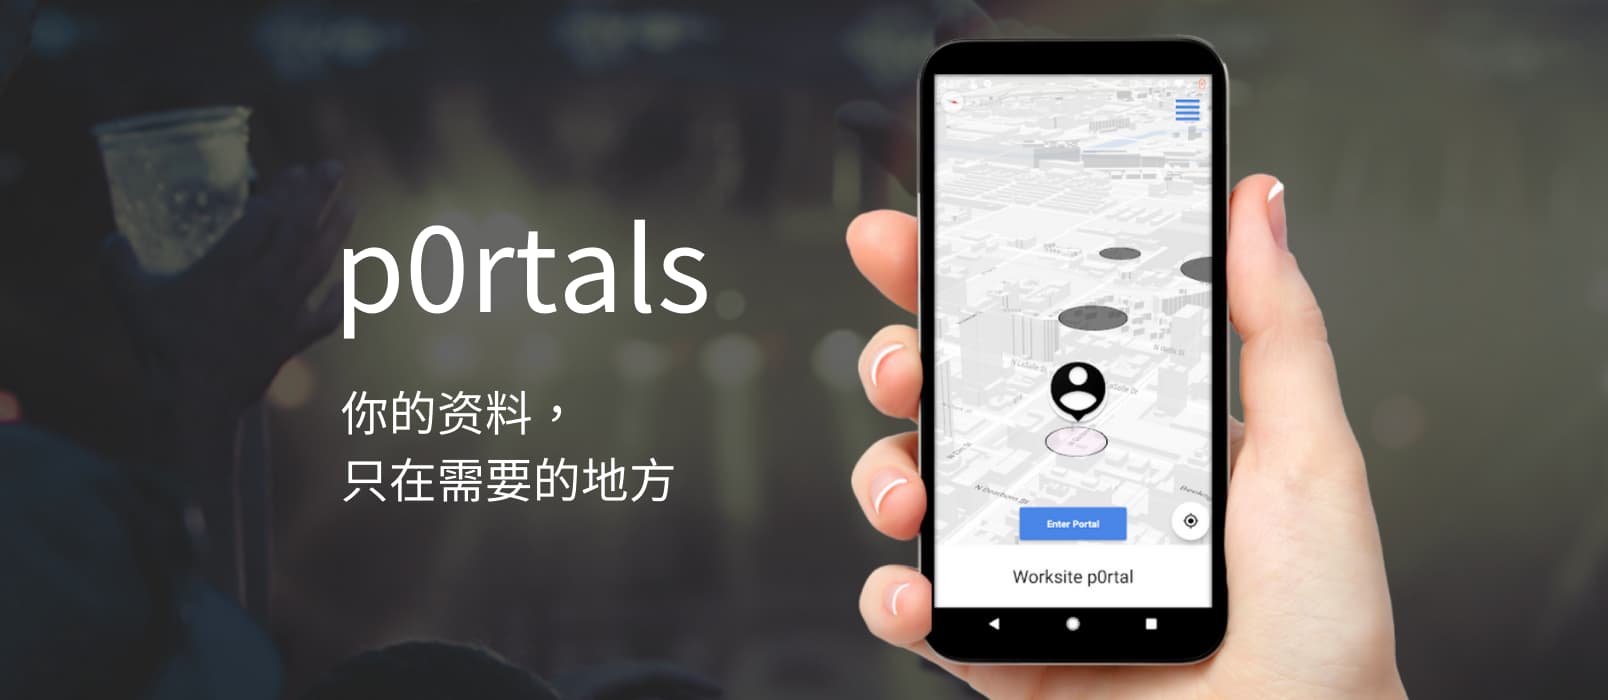 p0rtals - 你的资料，只在需要的地方[Android] 1